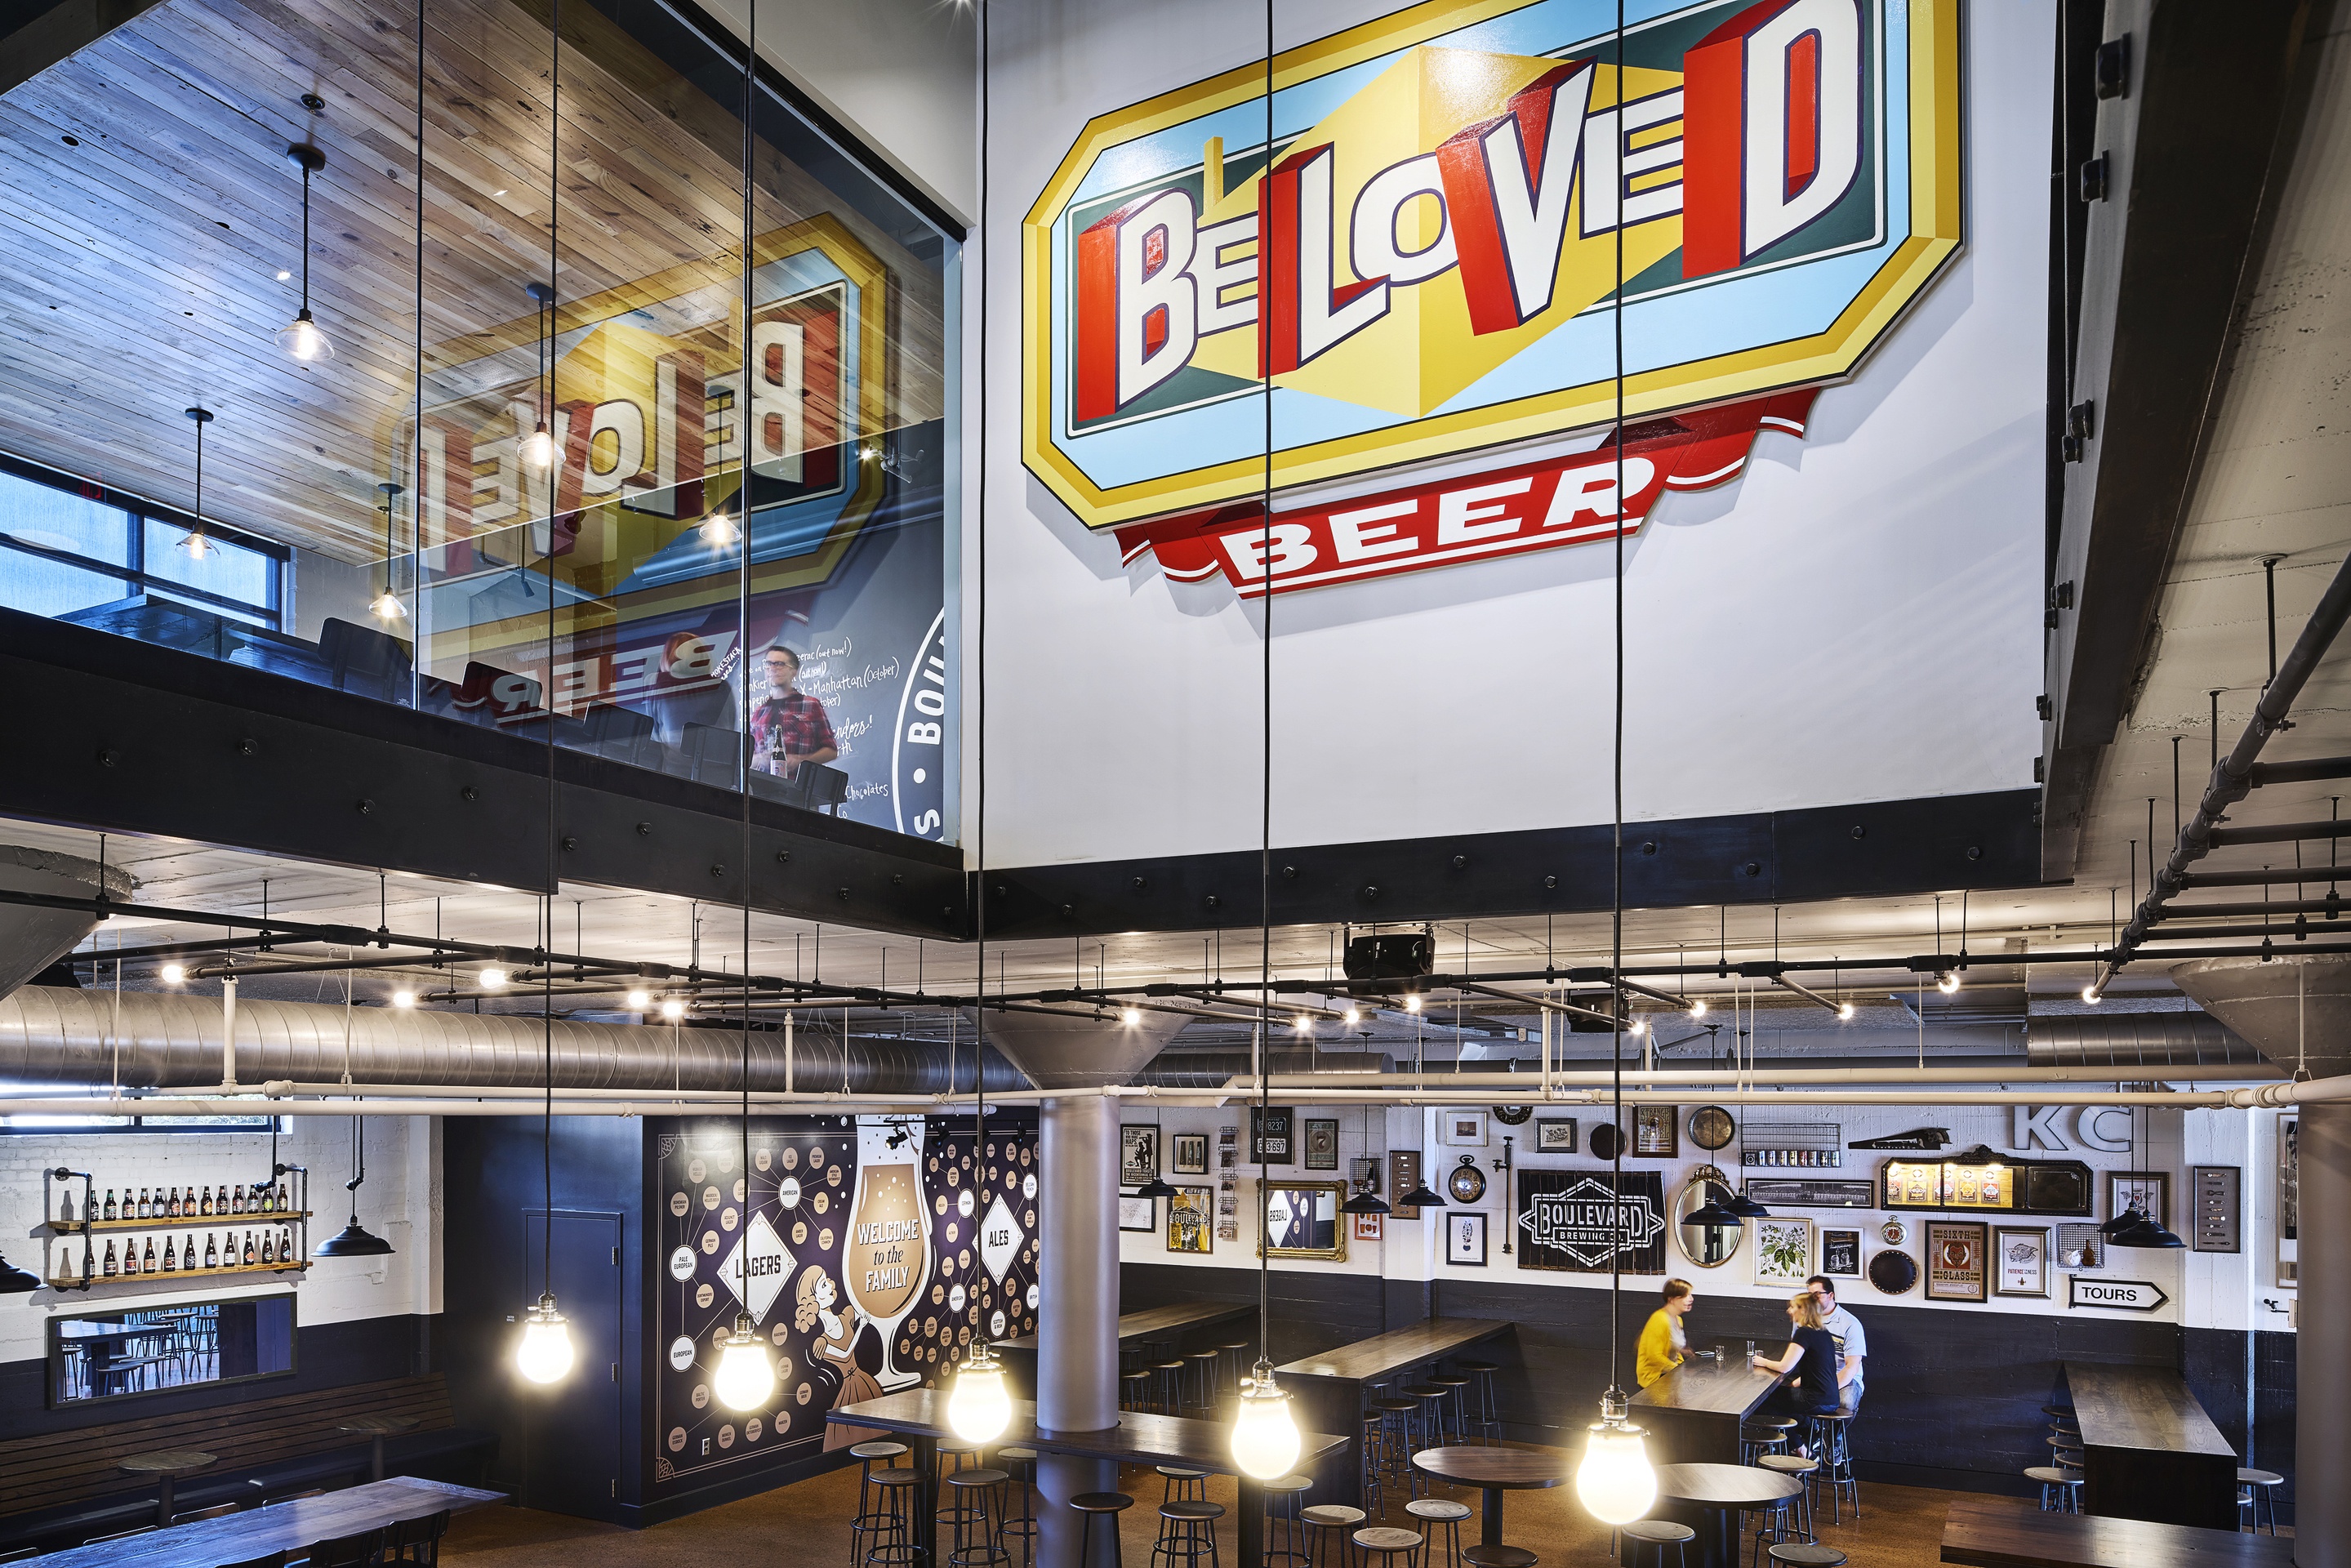 boulevard brewing tours & recreation center events